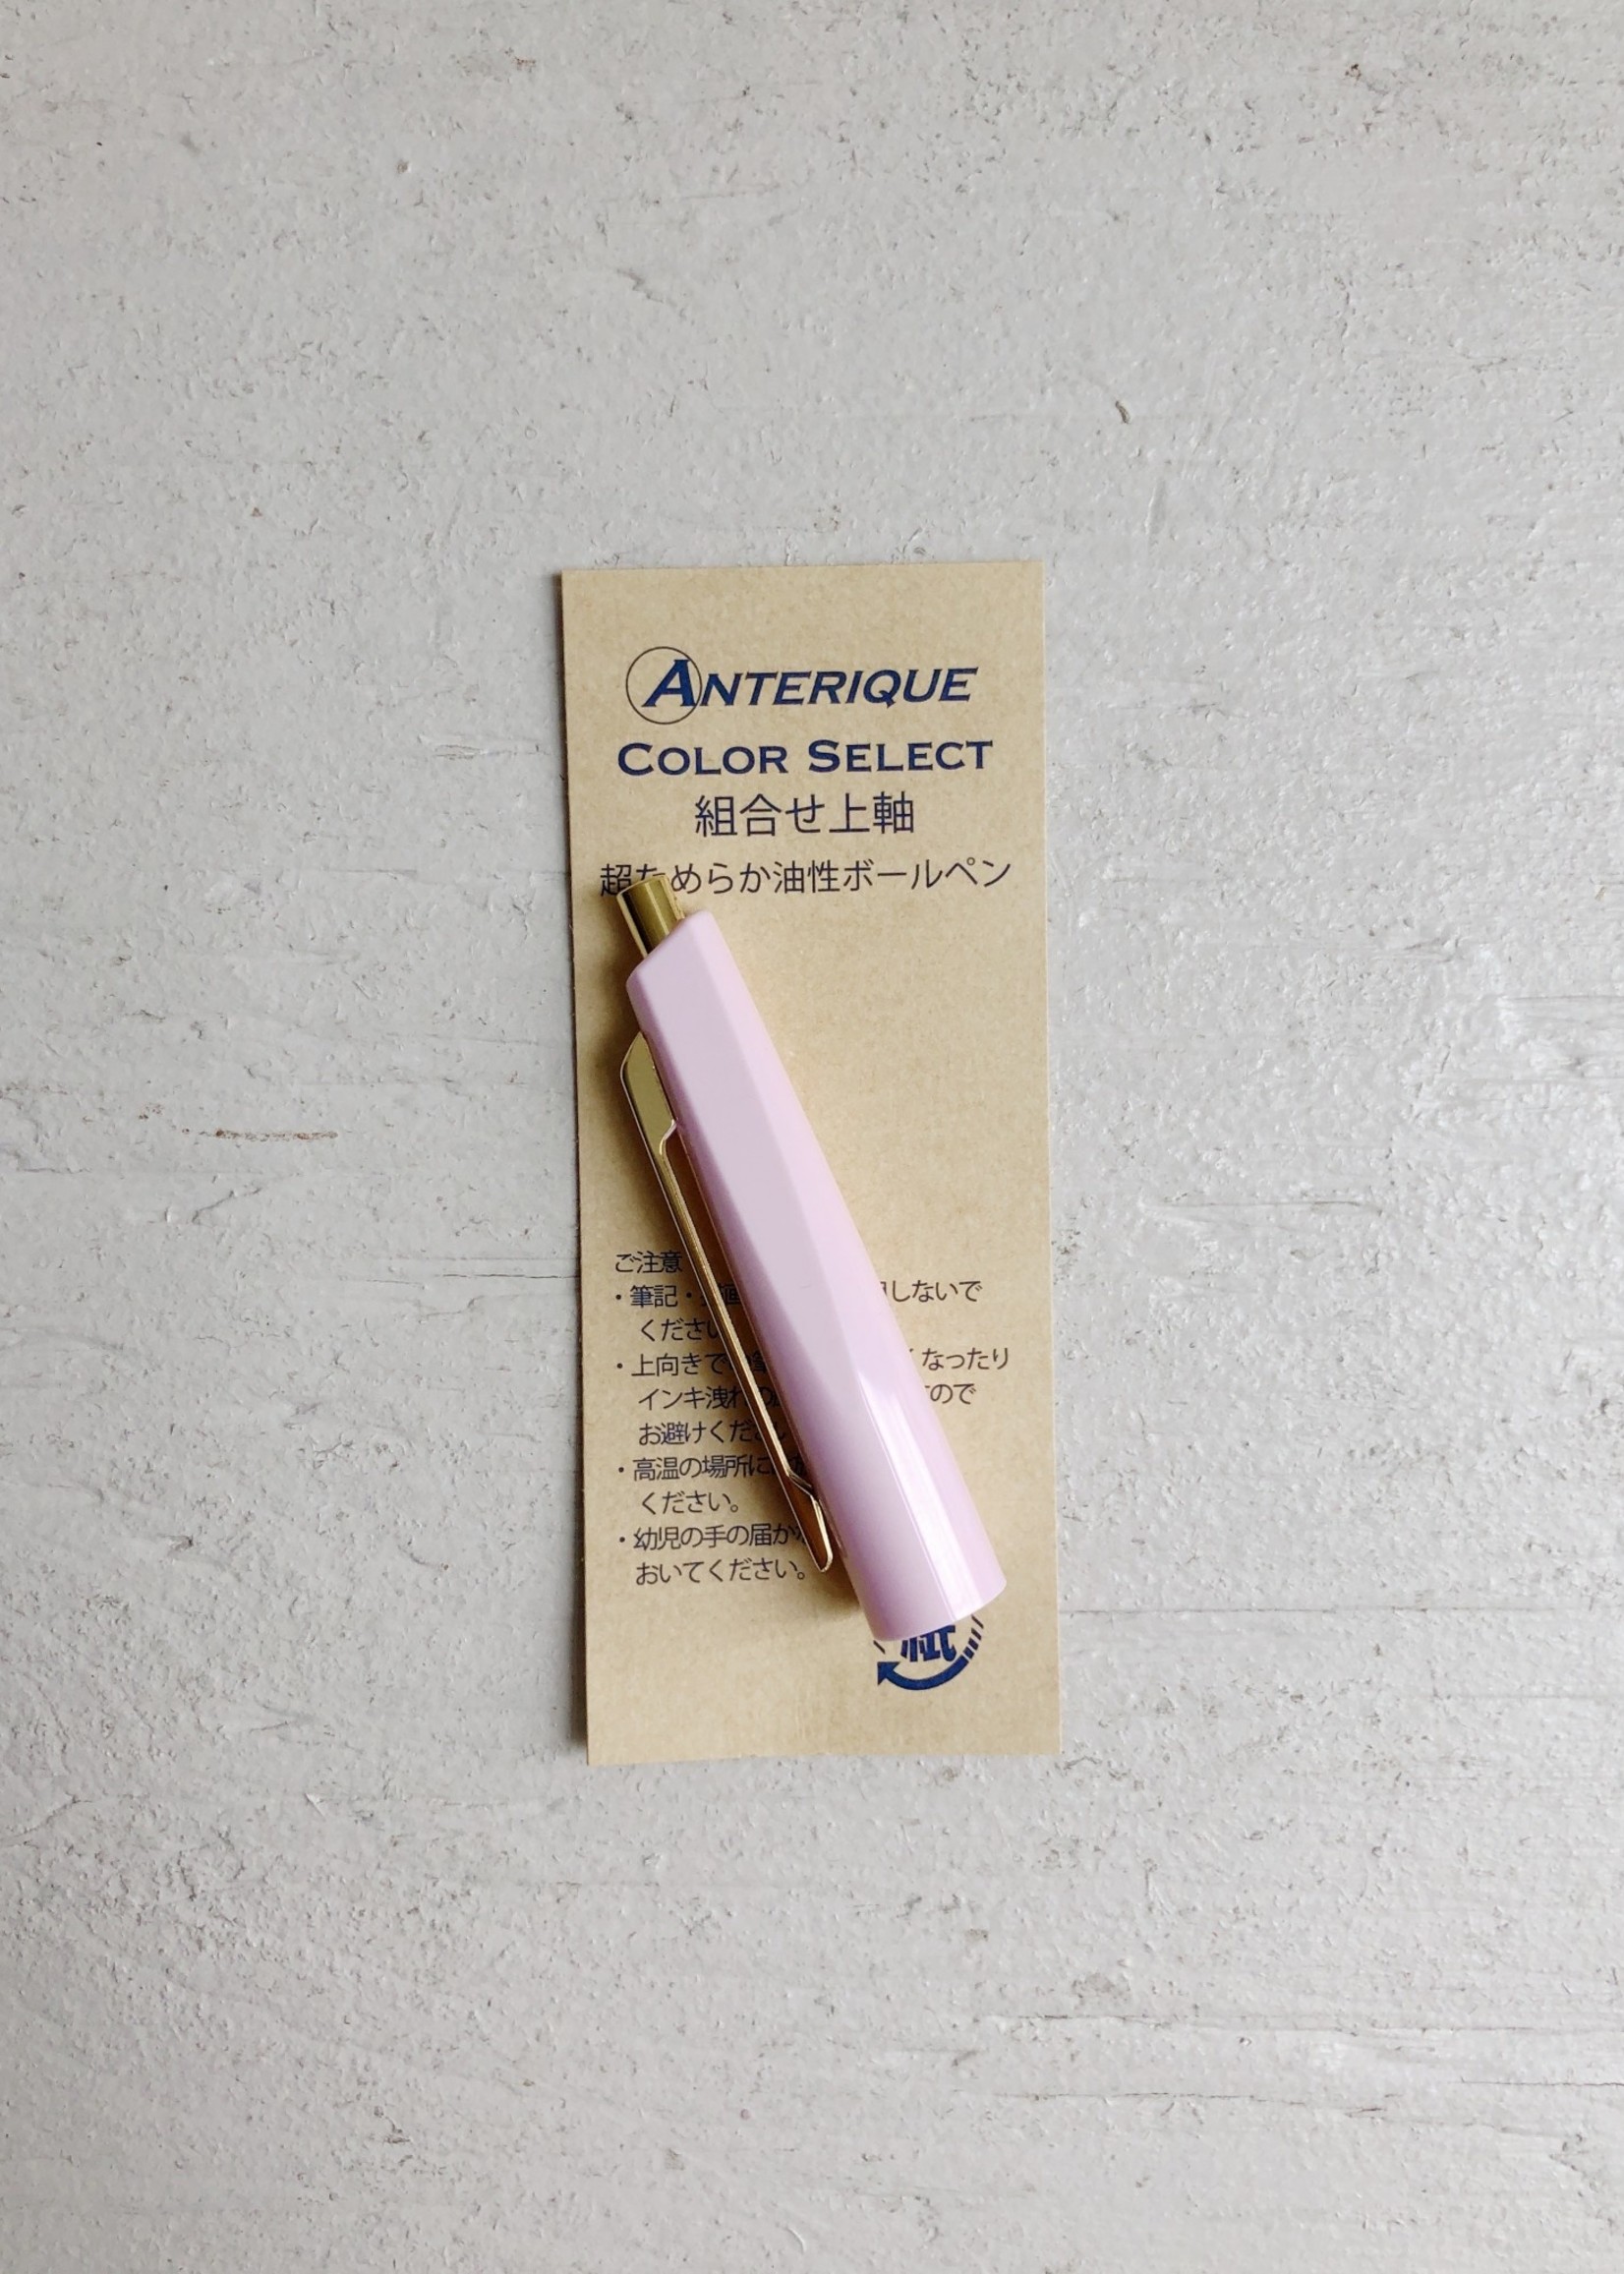 Anterique Upper Body Ballpoint Pen by Anterique